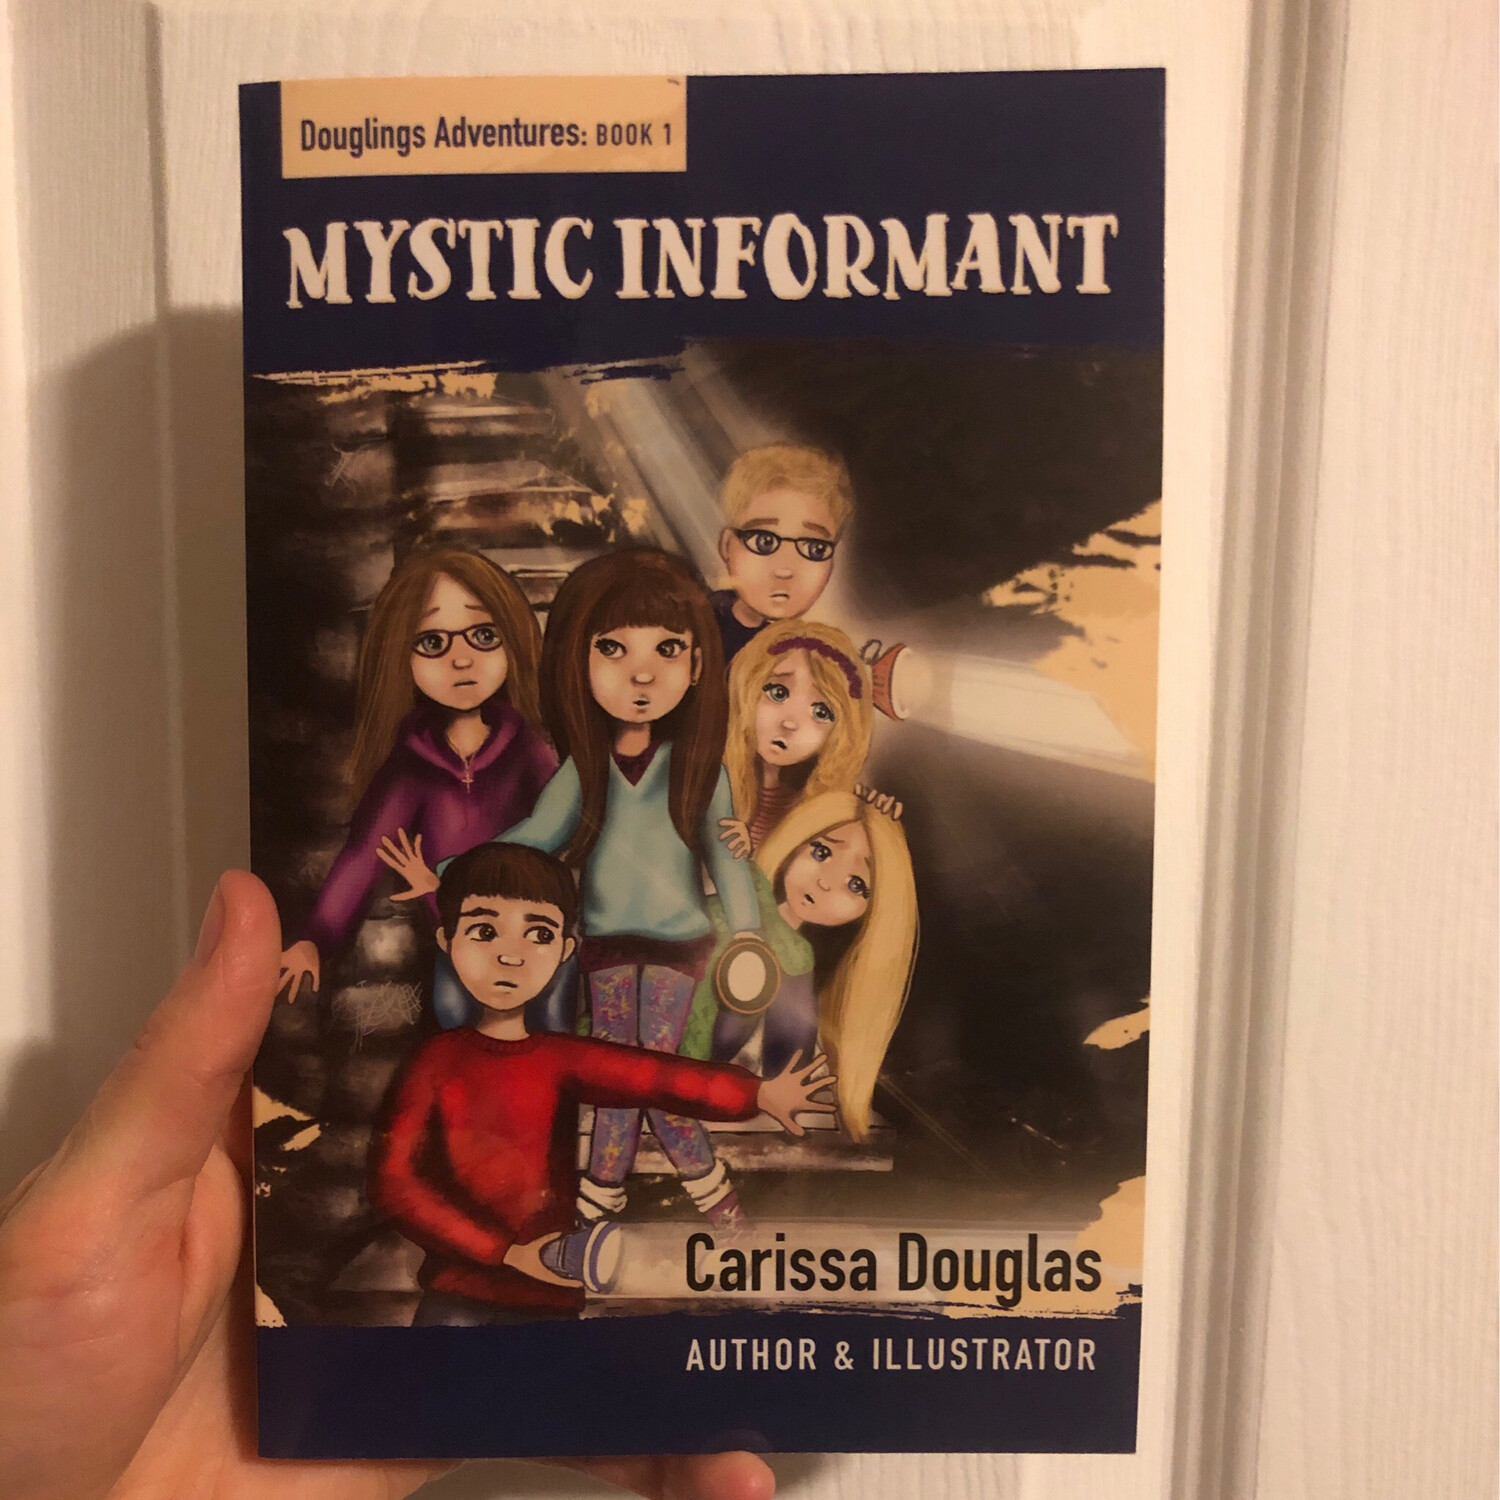 Douglings Adventures: book 1 Mystic Informant by Carissa Douglas